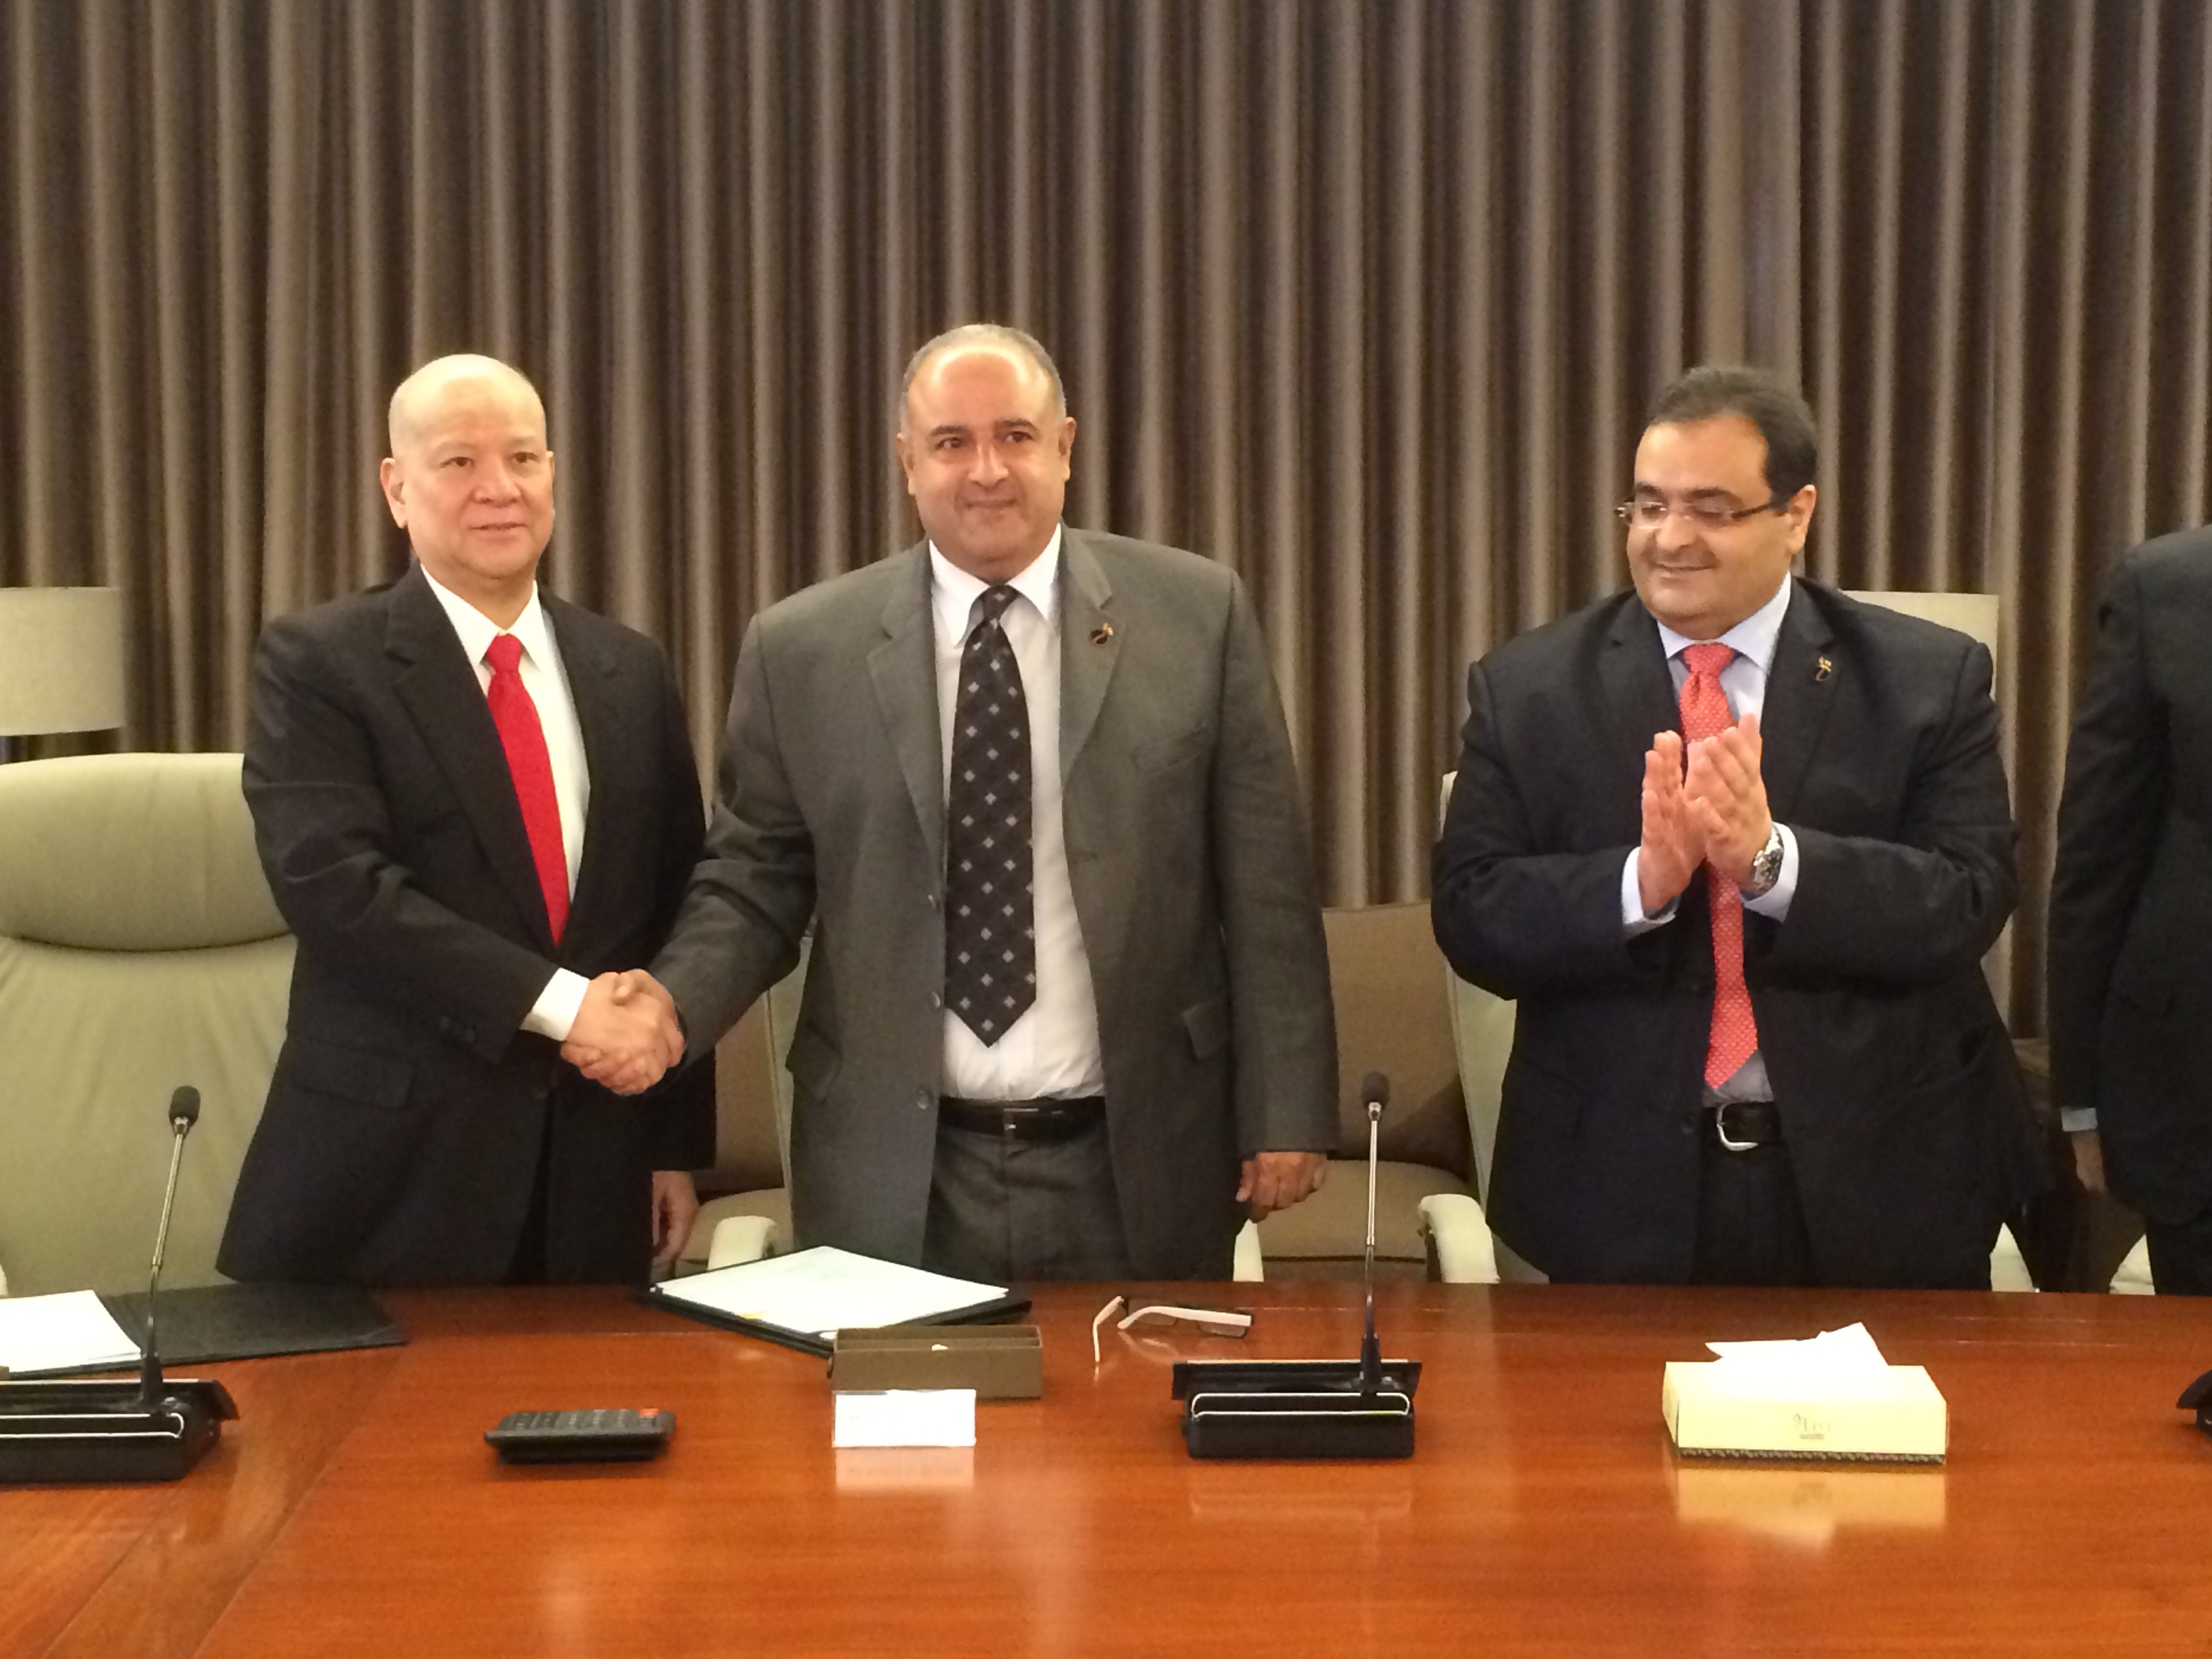 KPC's International Marketing Managing Director Nasser Al-Mudhaf and Petron Singapore Ltd Chairman and CEO Ramon S. Ang after signature